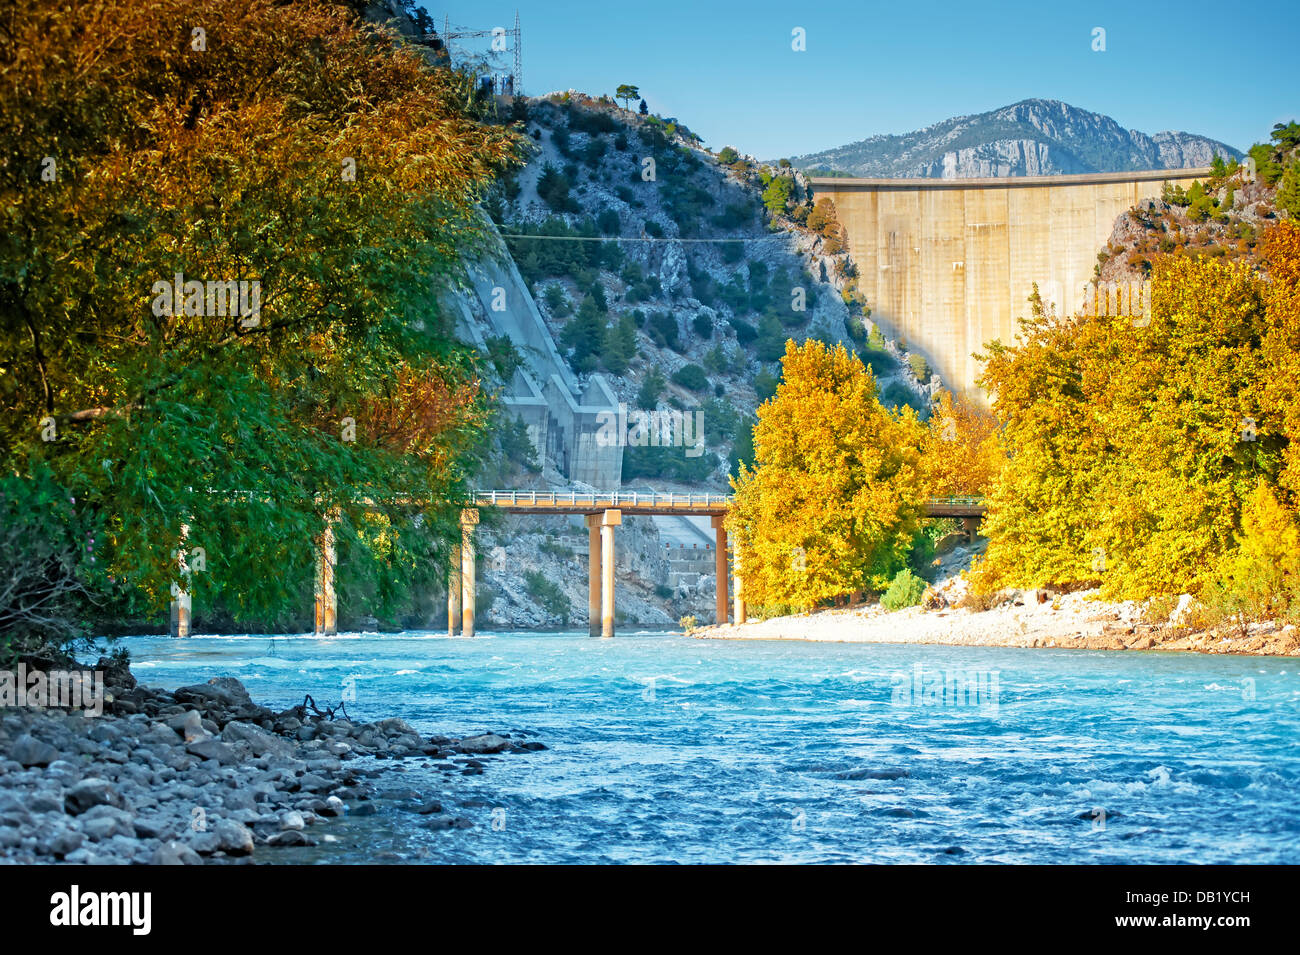 Oymapinar dam on the river Manavgat Stock Photo